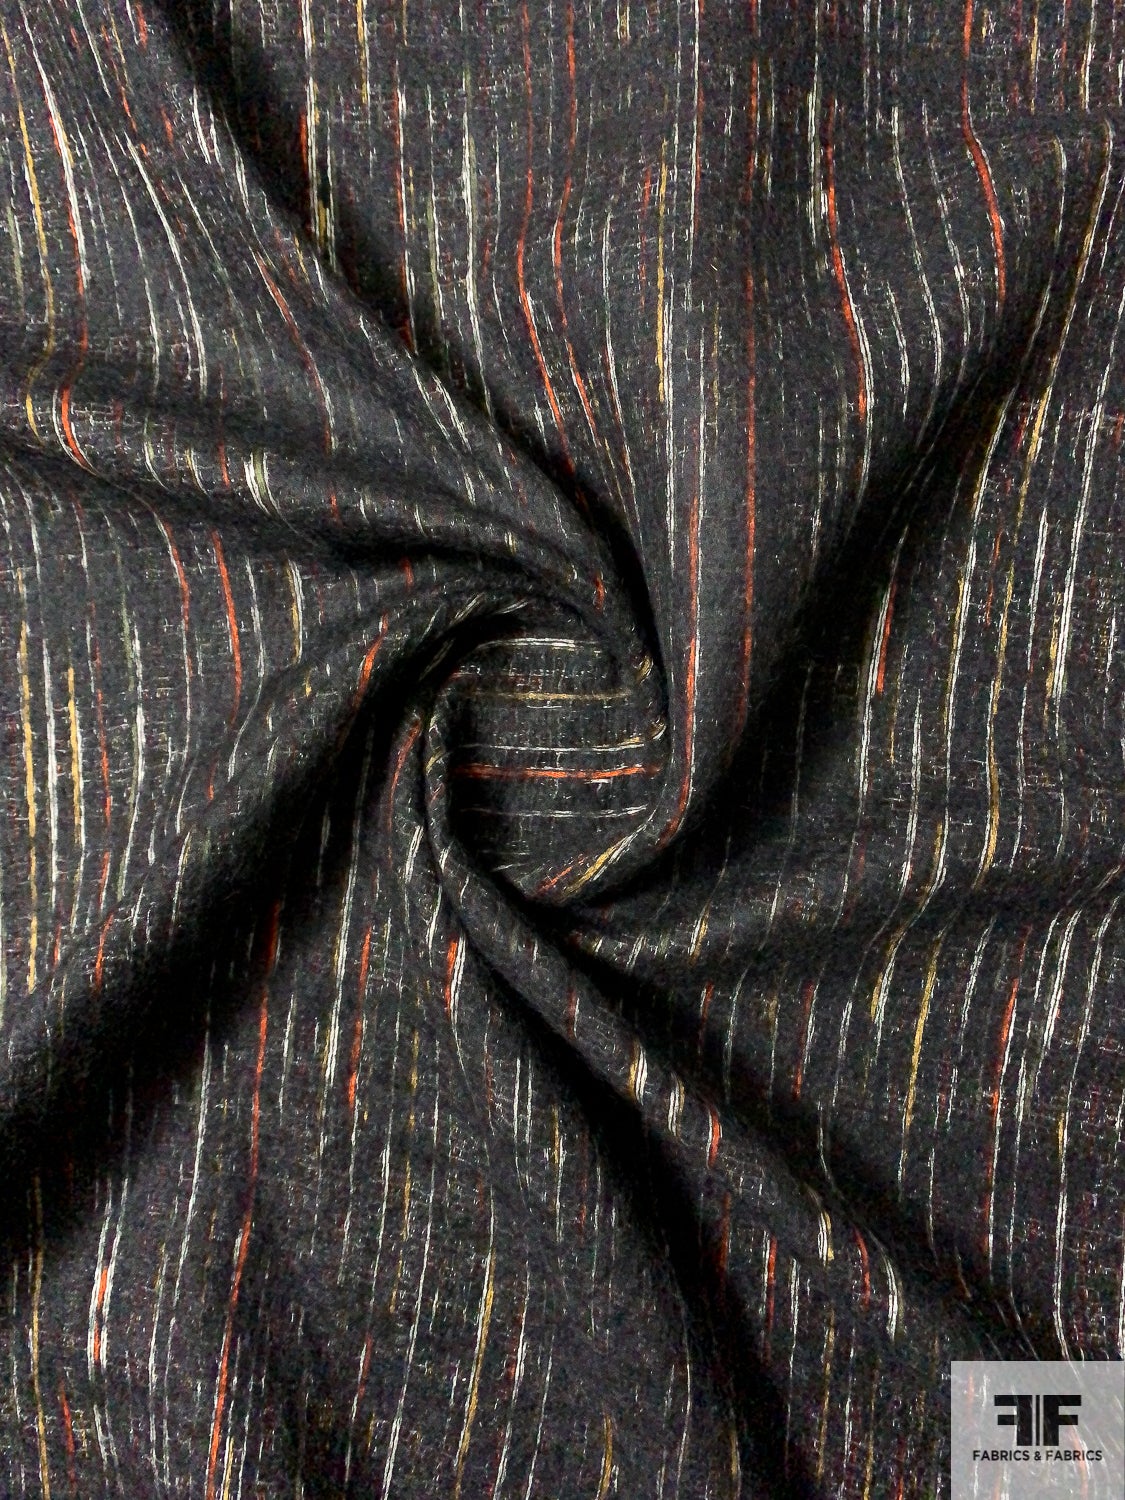 Italian Streaky Lines Brushed Wool Blend Suiting - Black / Turmeric / Orange / Off-White